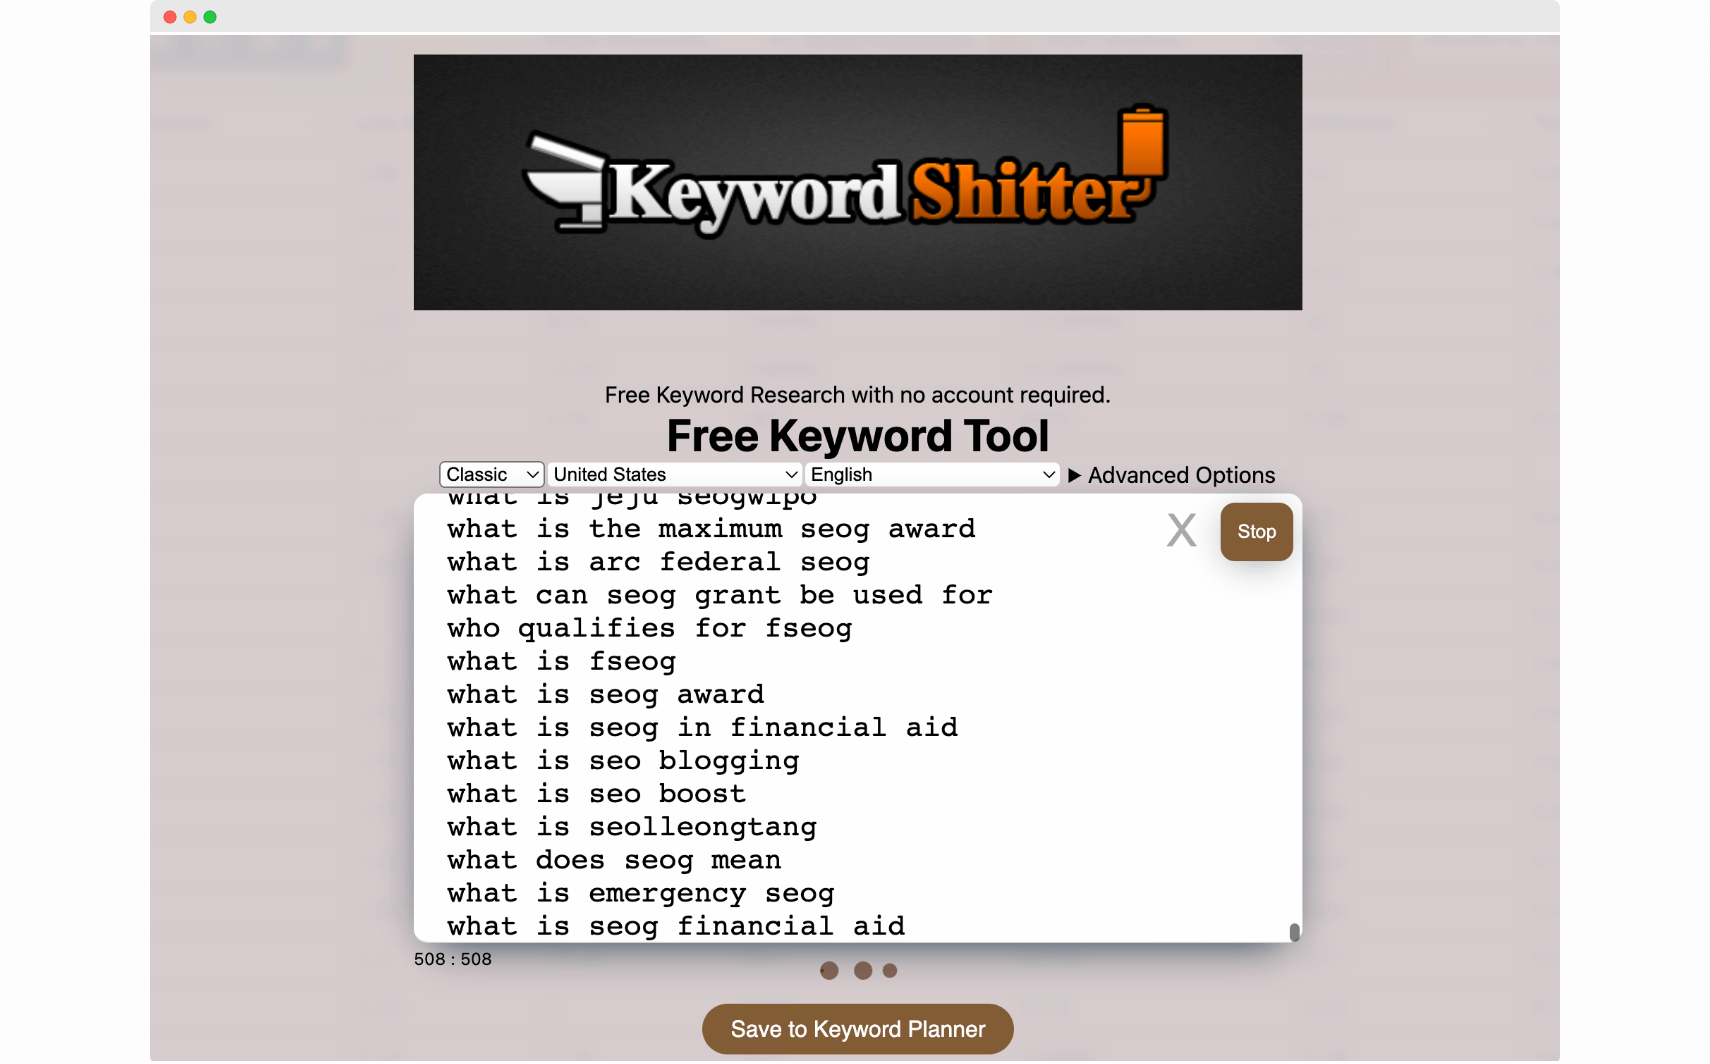 Keyword Sheeter